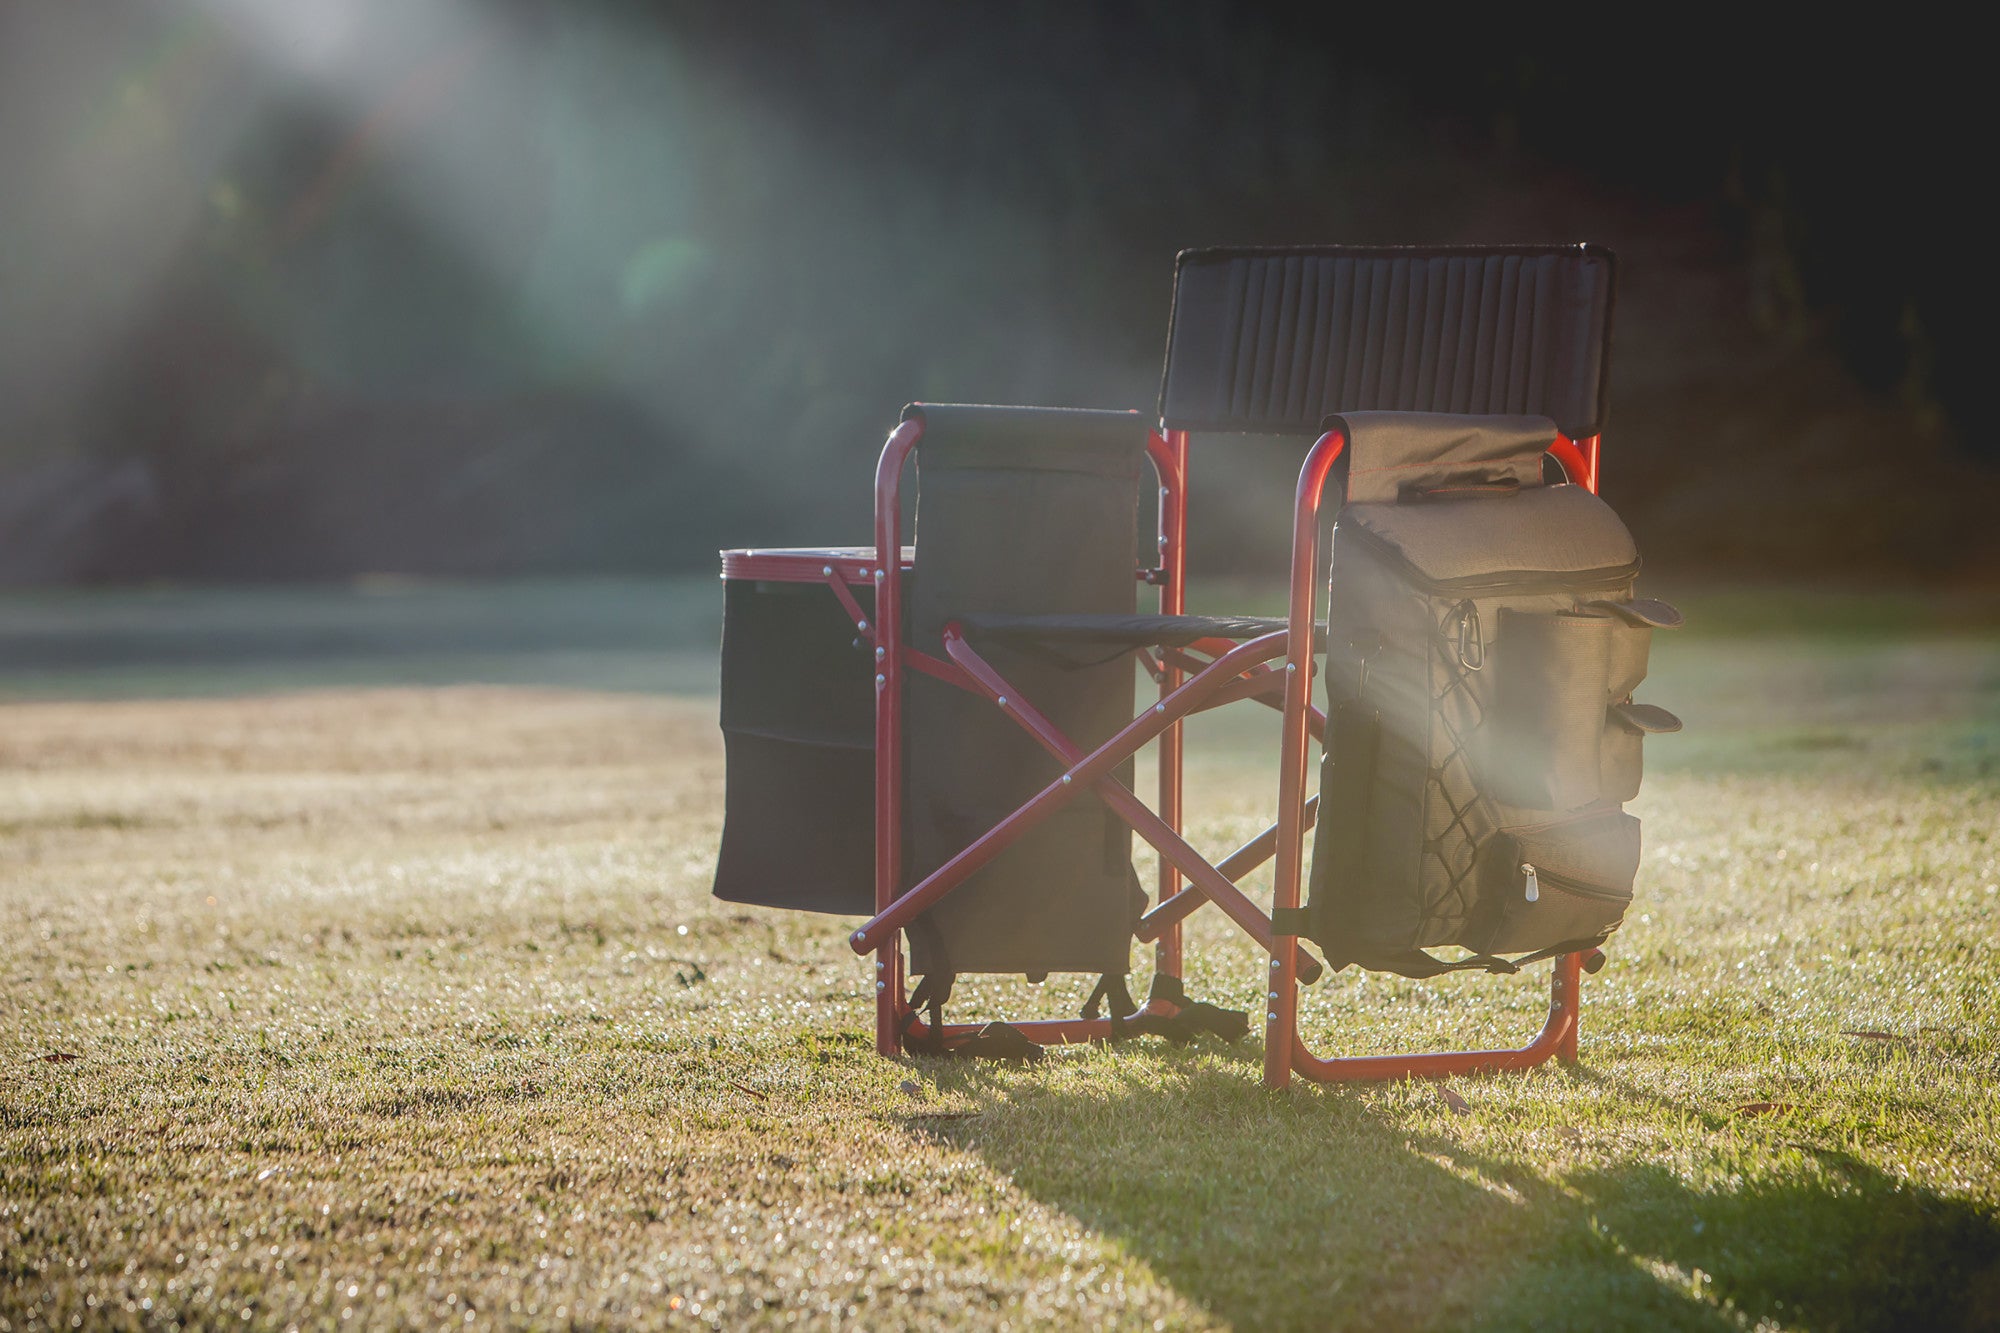 Texas Tech Red Raiders - Fusion Camping Chair